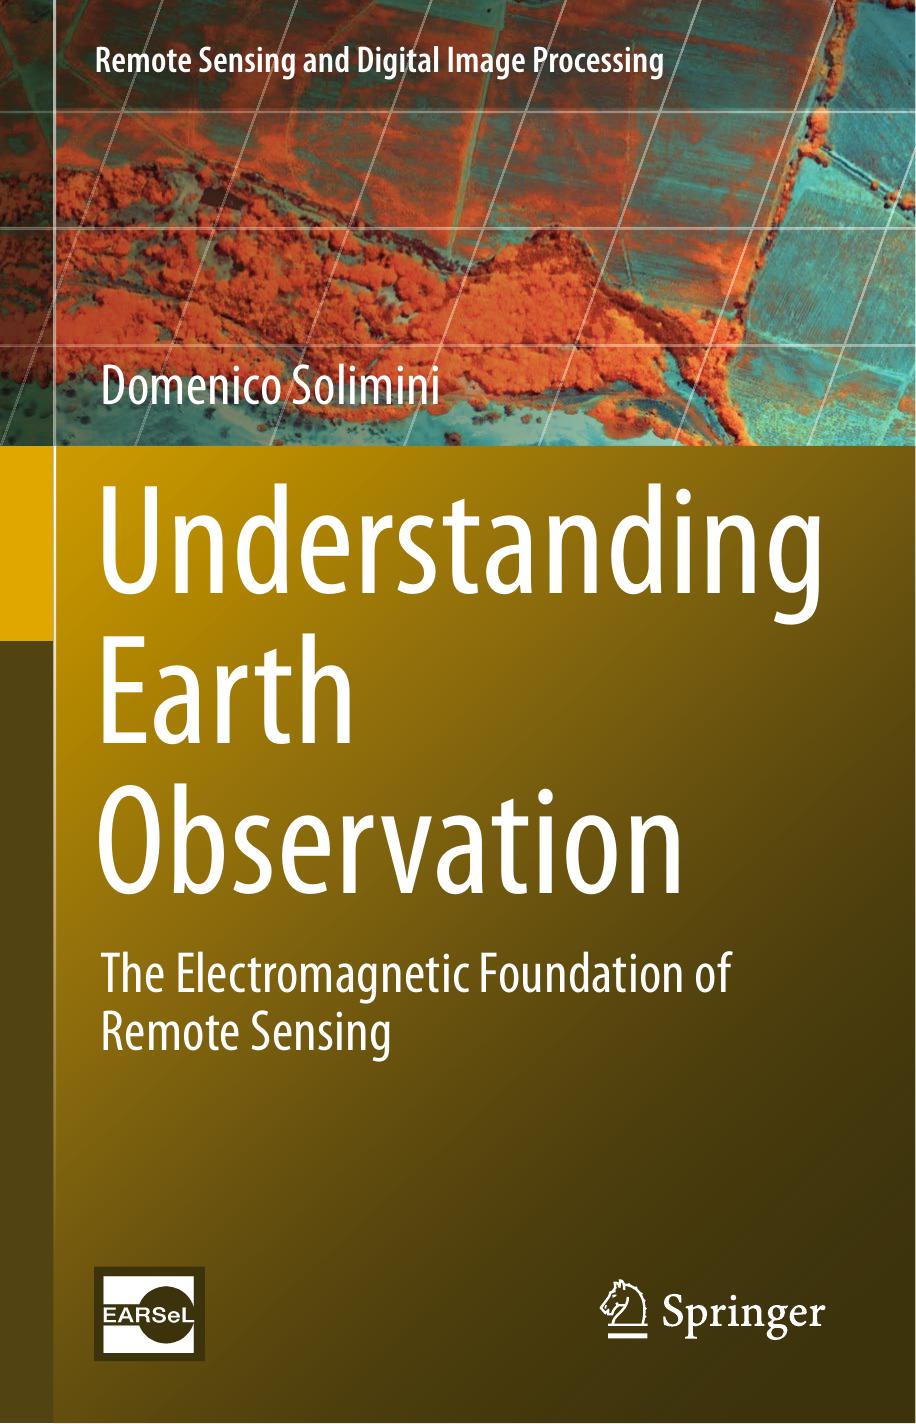 Understanding Earth Observation, 2016